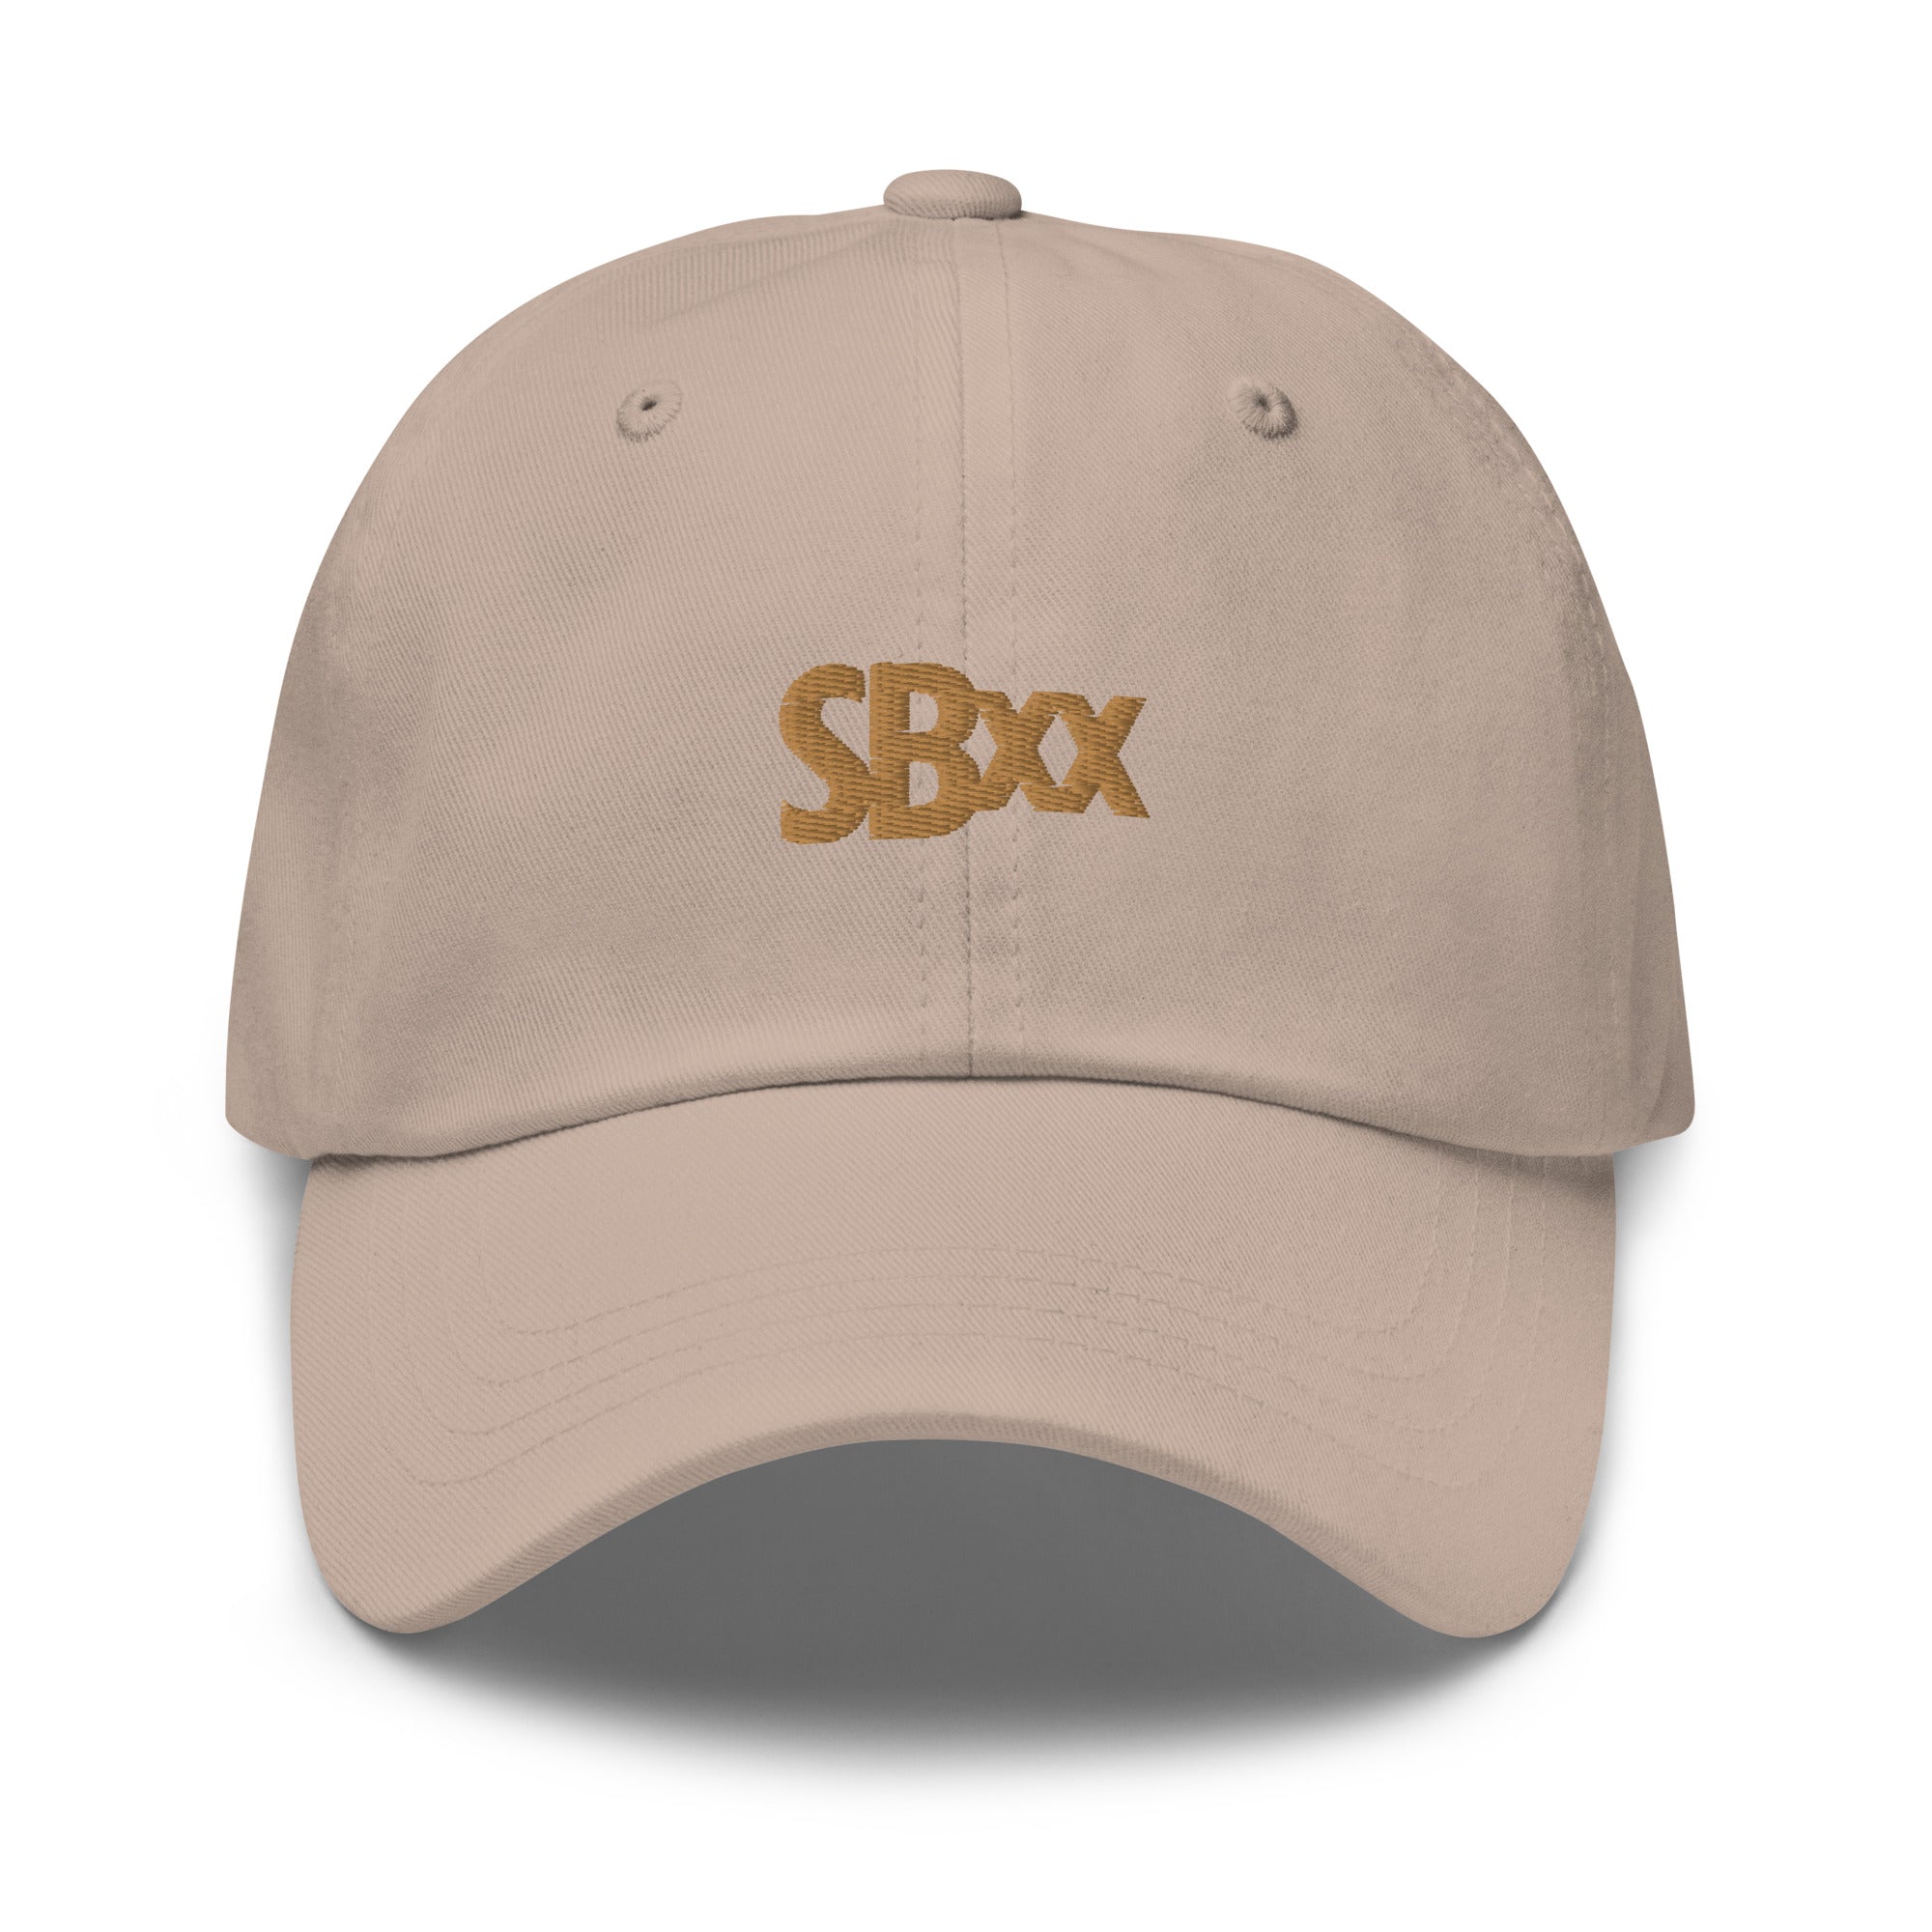 SBXX Logo Classic Dad Hat